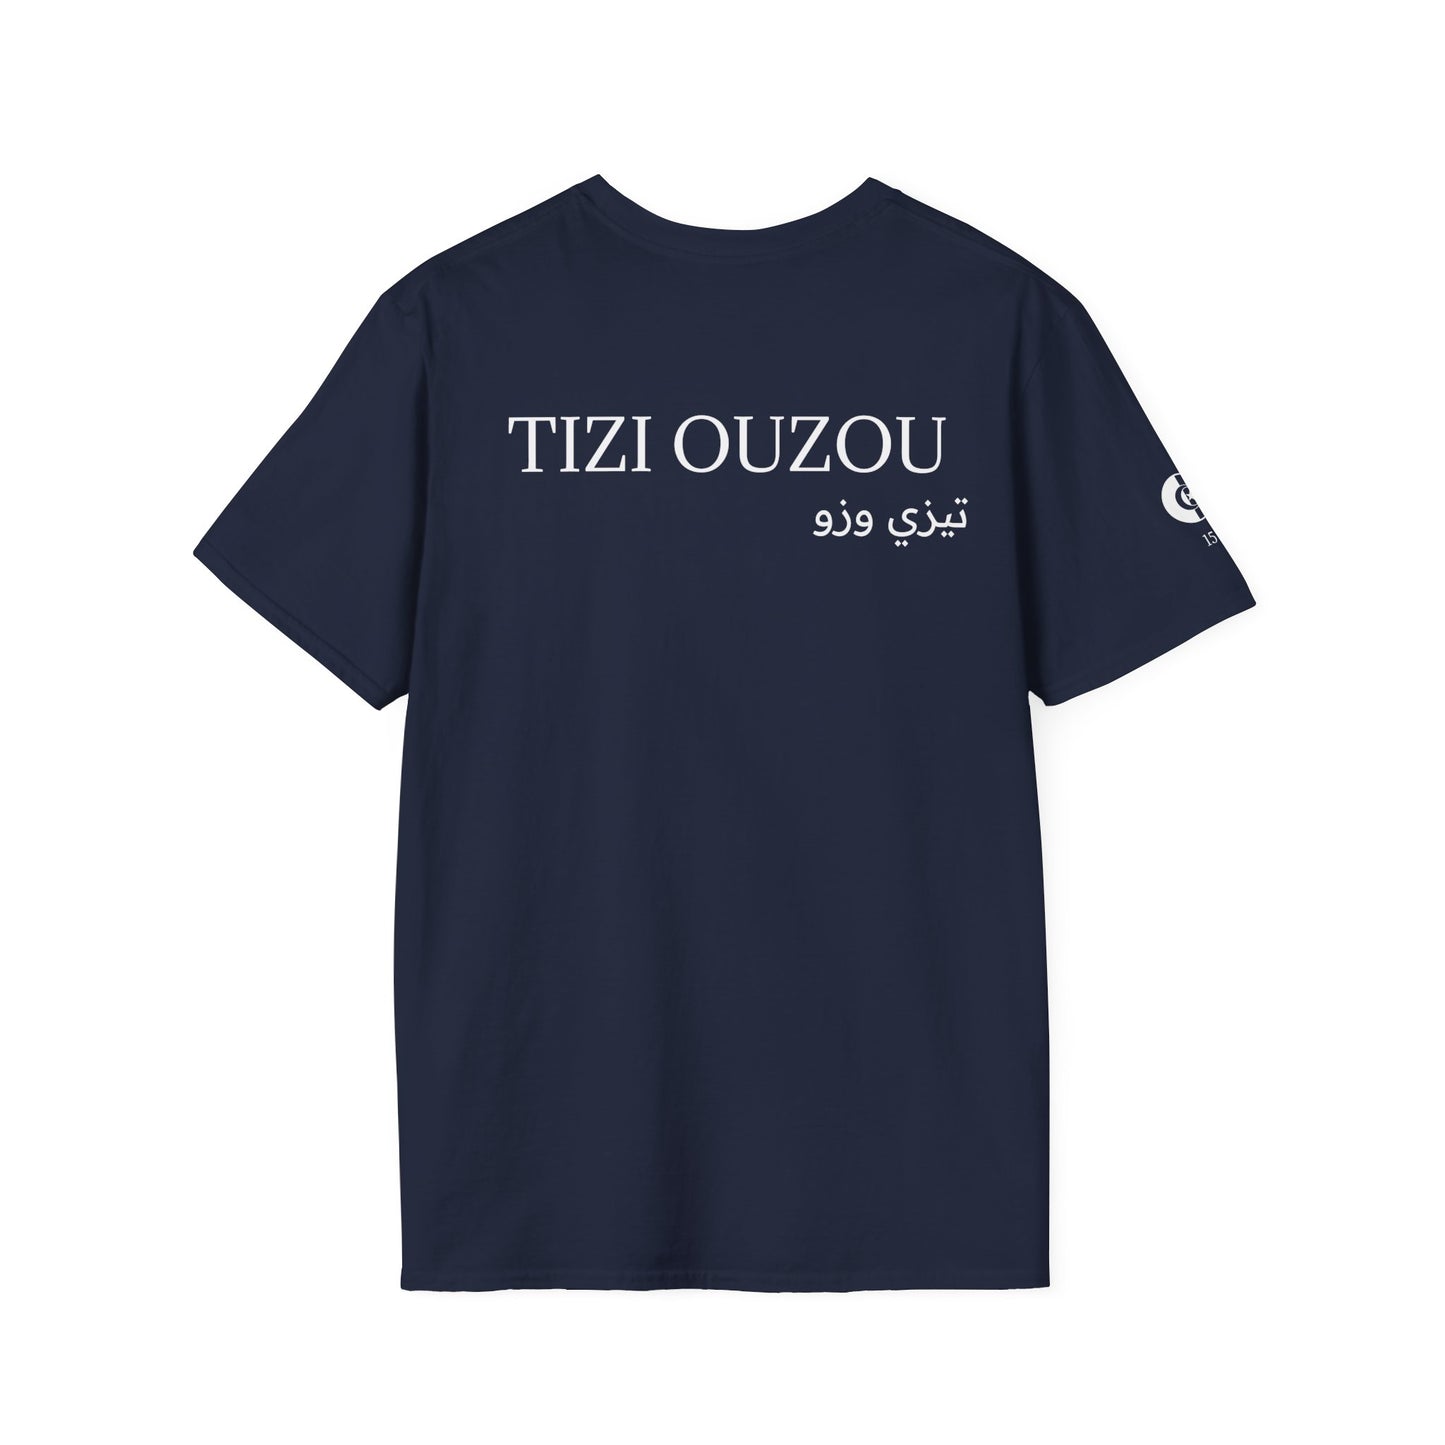 T-Shirt TIZI OUZOU 15